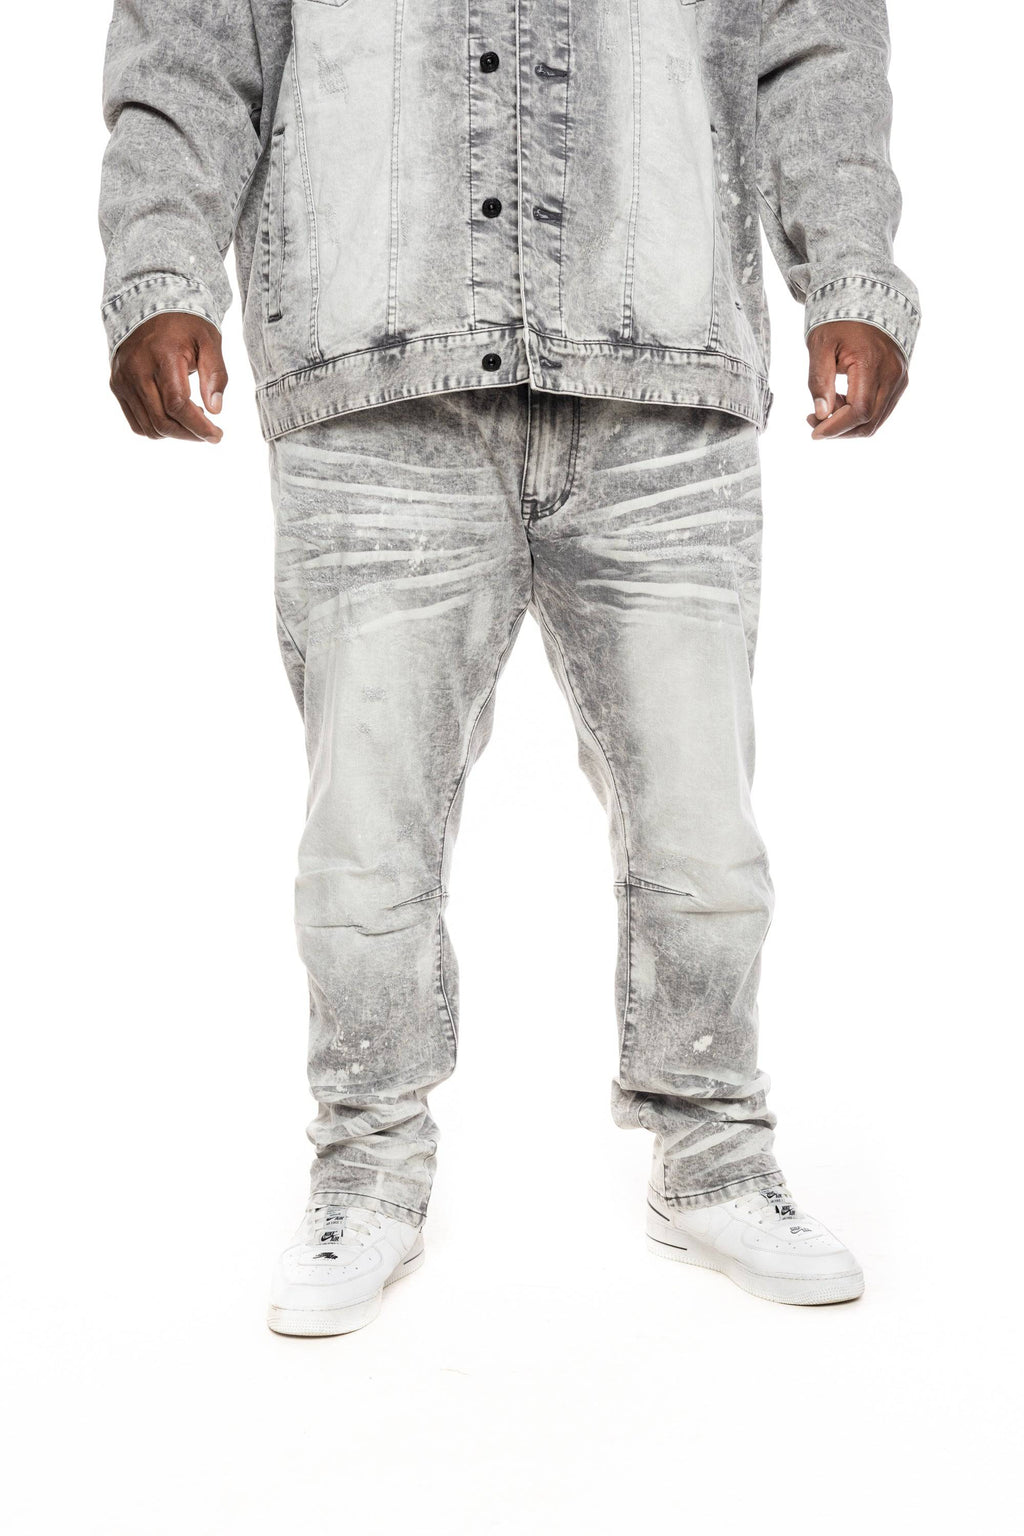 Smoke Rise - Men's Bleached Detail Semi Basic Denim Jacket Ocean Blue - 5XL - Urban/Streetwear